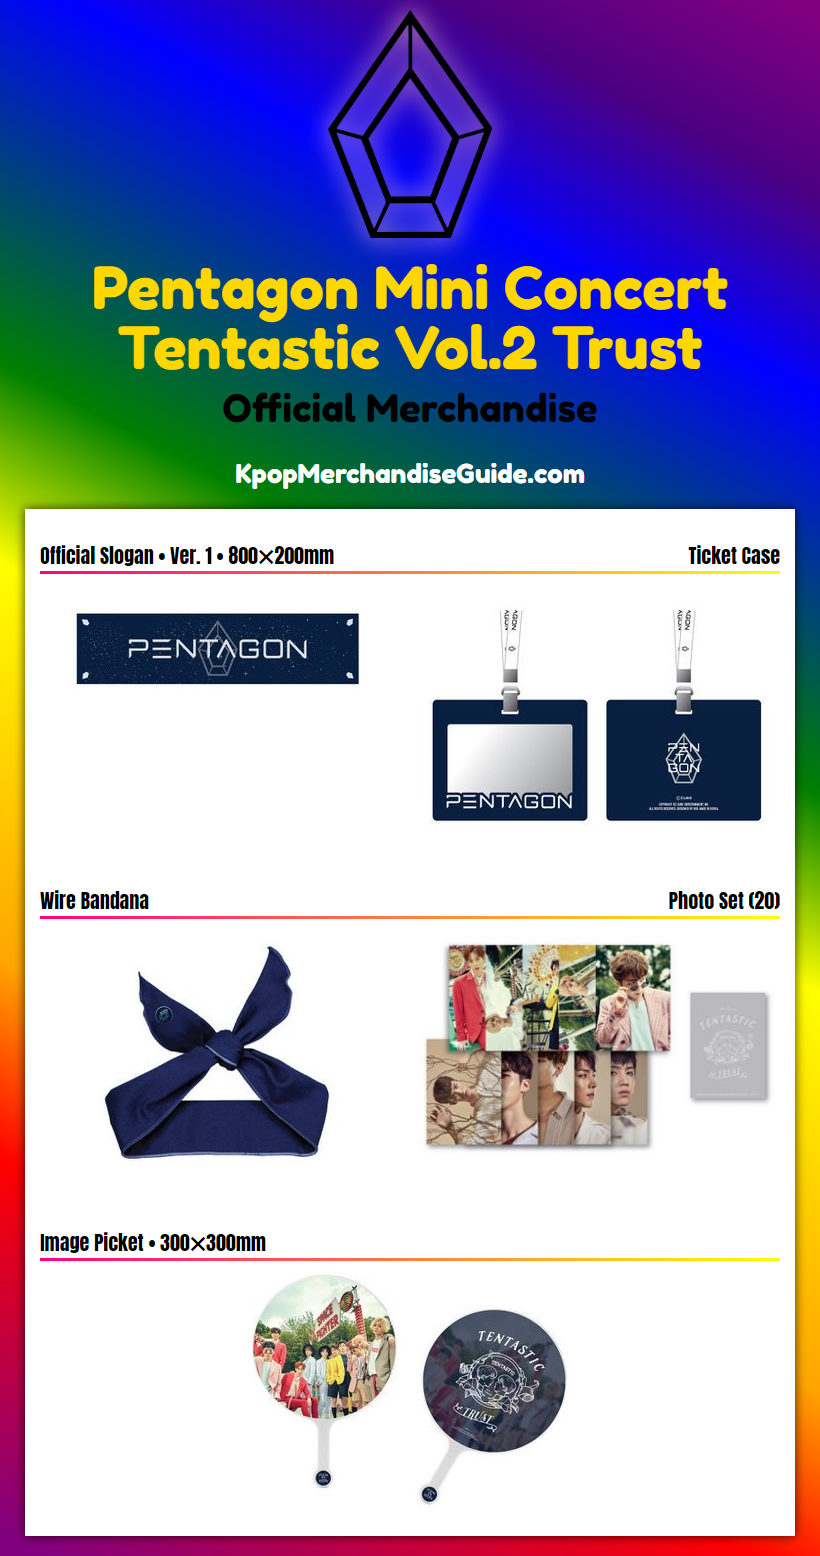 Pentagon Mini Concert Tentastic Vol.2 - Trust Merchandise